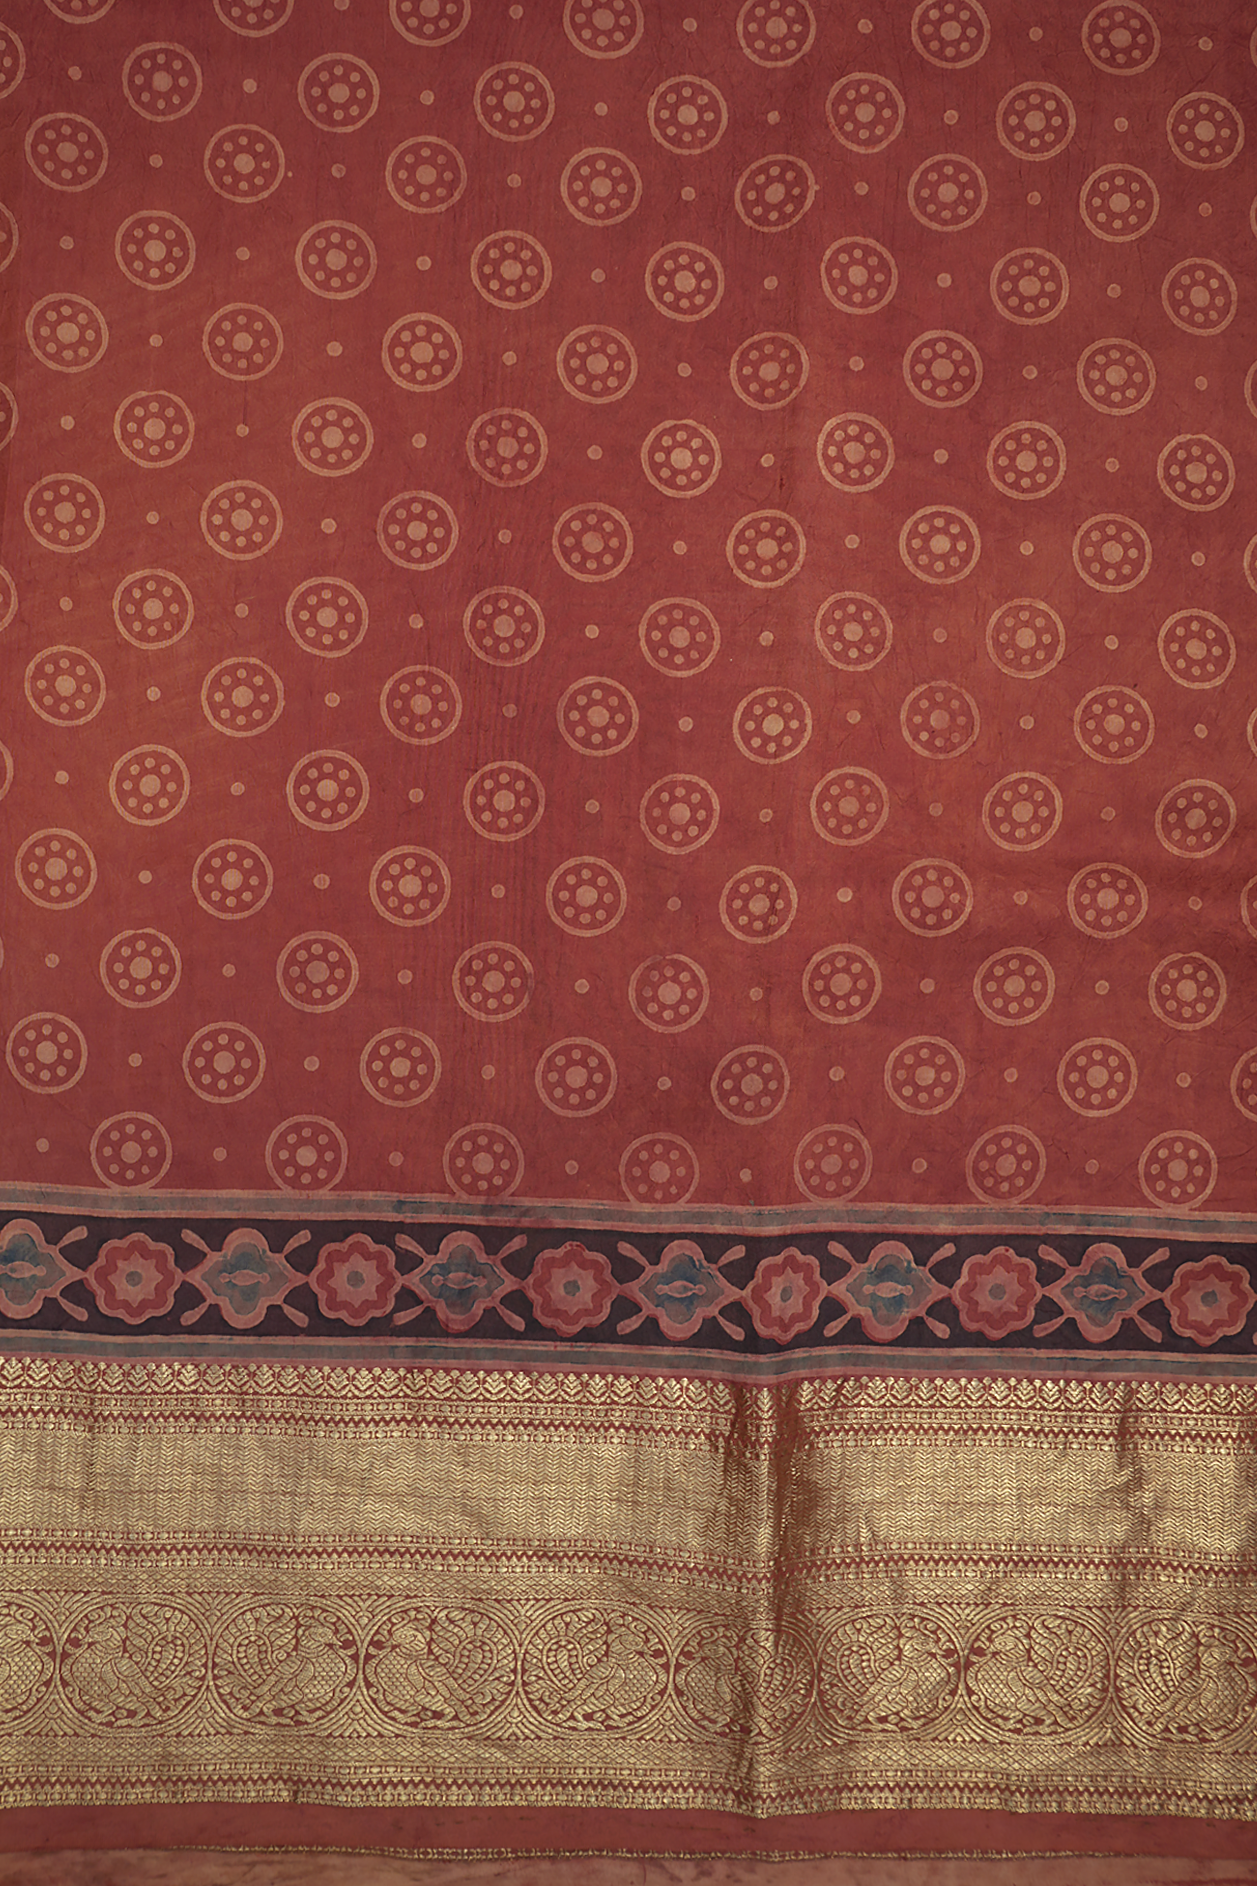 Floral Design Brick Red Hand Painted Ajrakh Kanchipuram Silk Saree